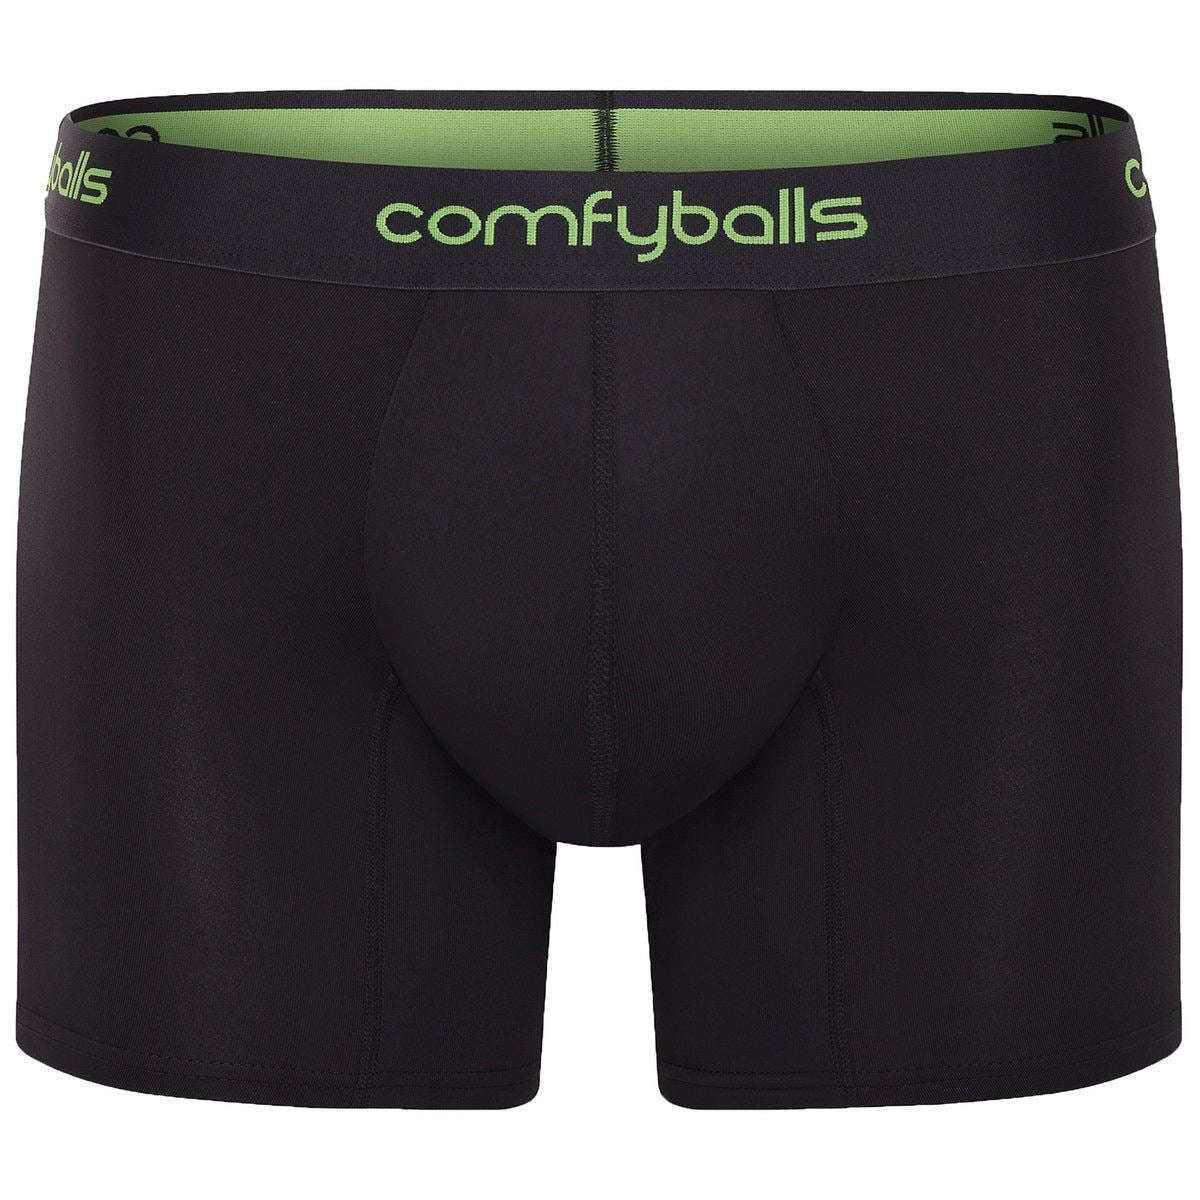 Comfyballs Performance Long Boxer - Charcoal/Viper Green